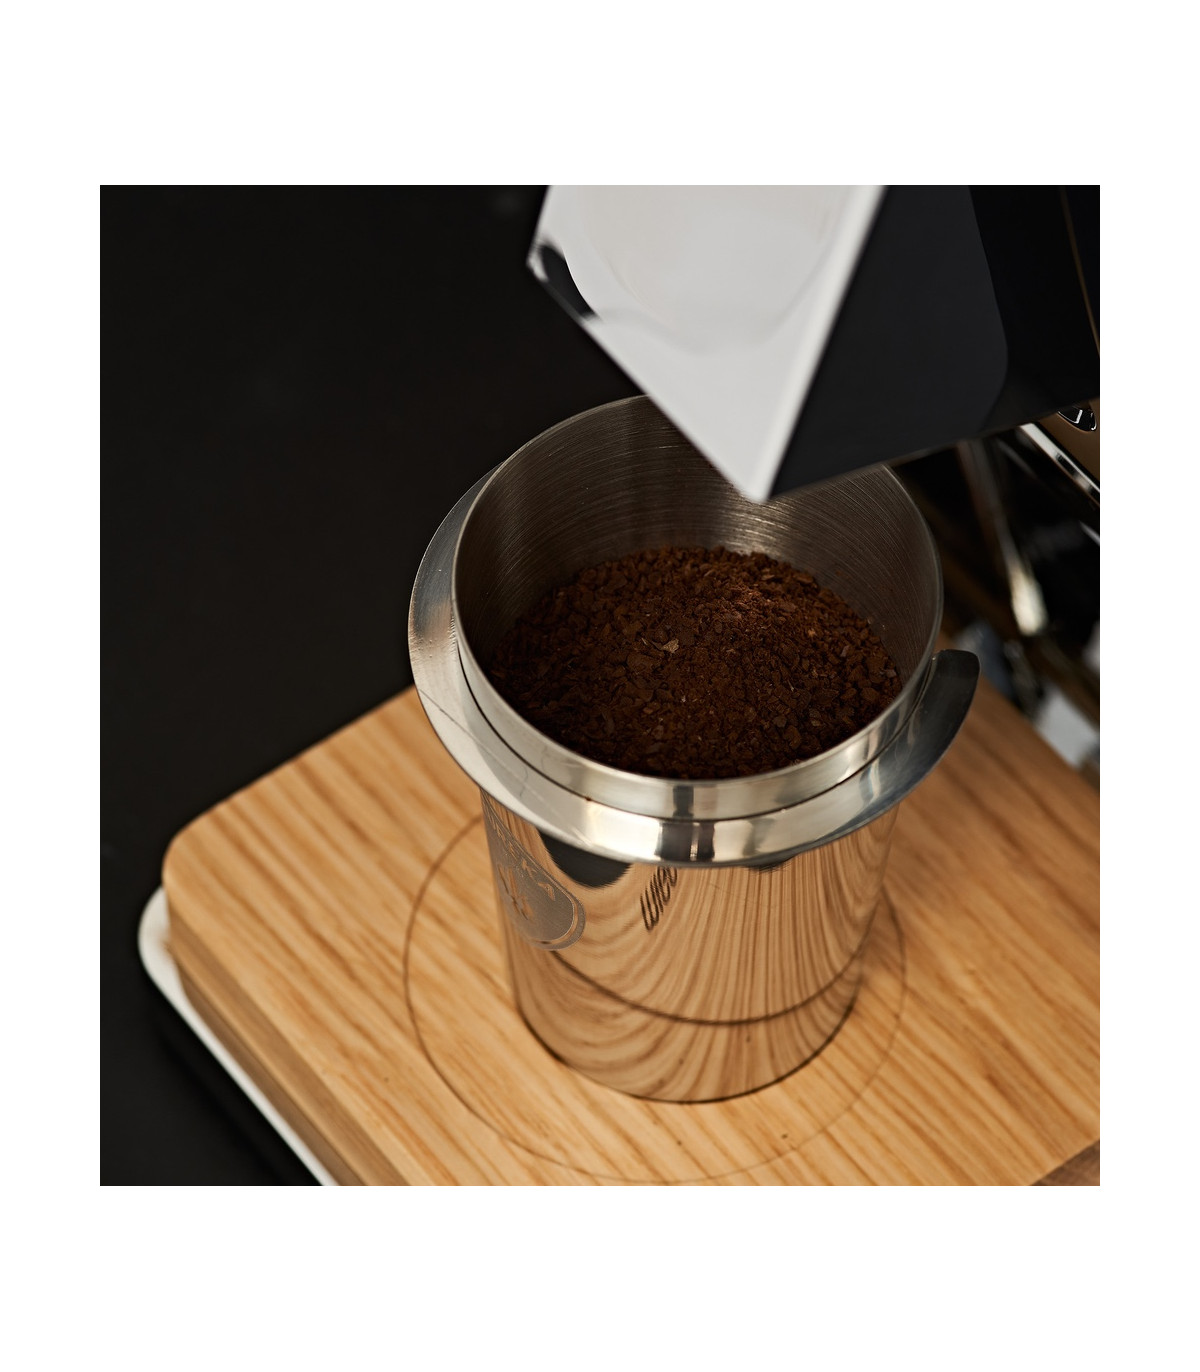 Buy Eureka Filtro Silent Coffee Grinder online